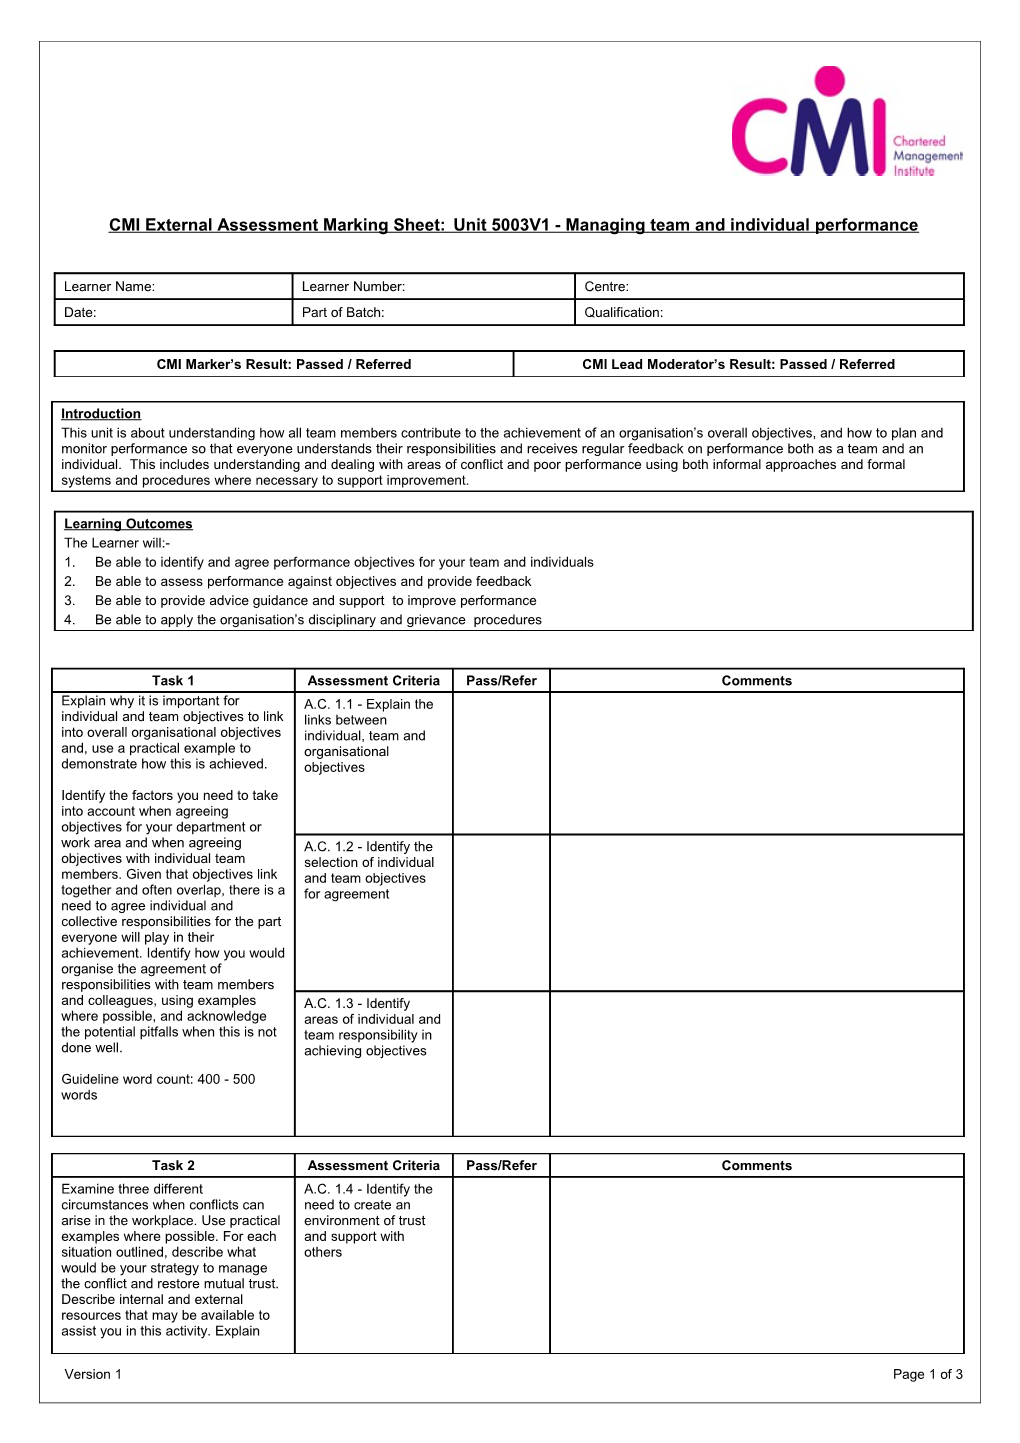 CMI External Assessment Marking Sheet:Unit 5003V1 - Managing Team and Individual Performance